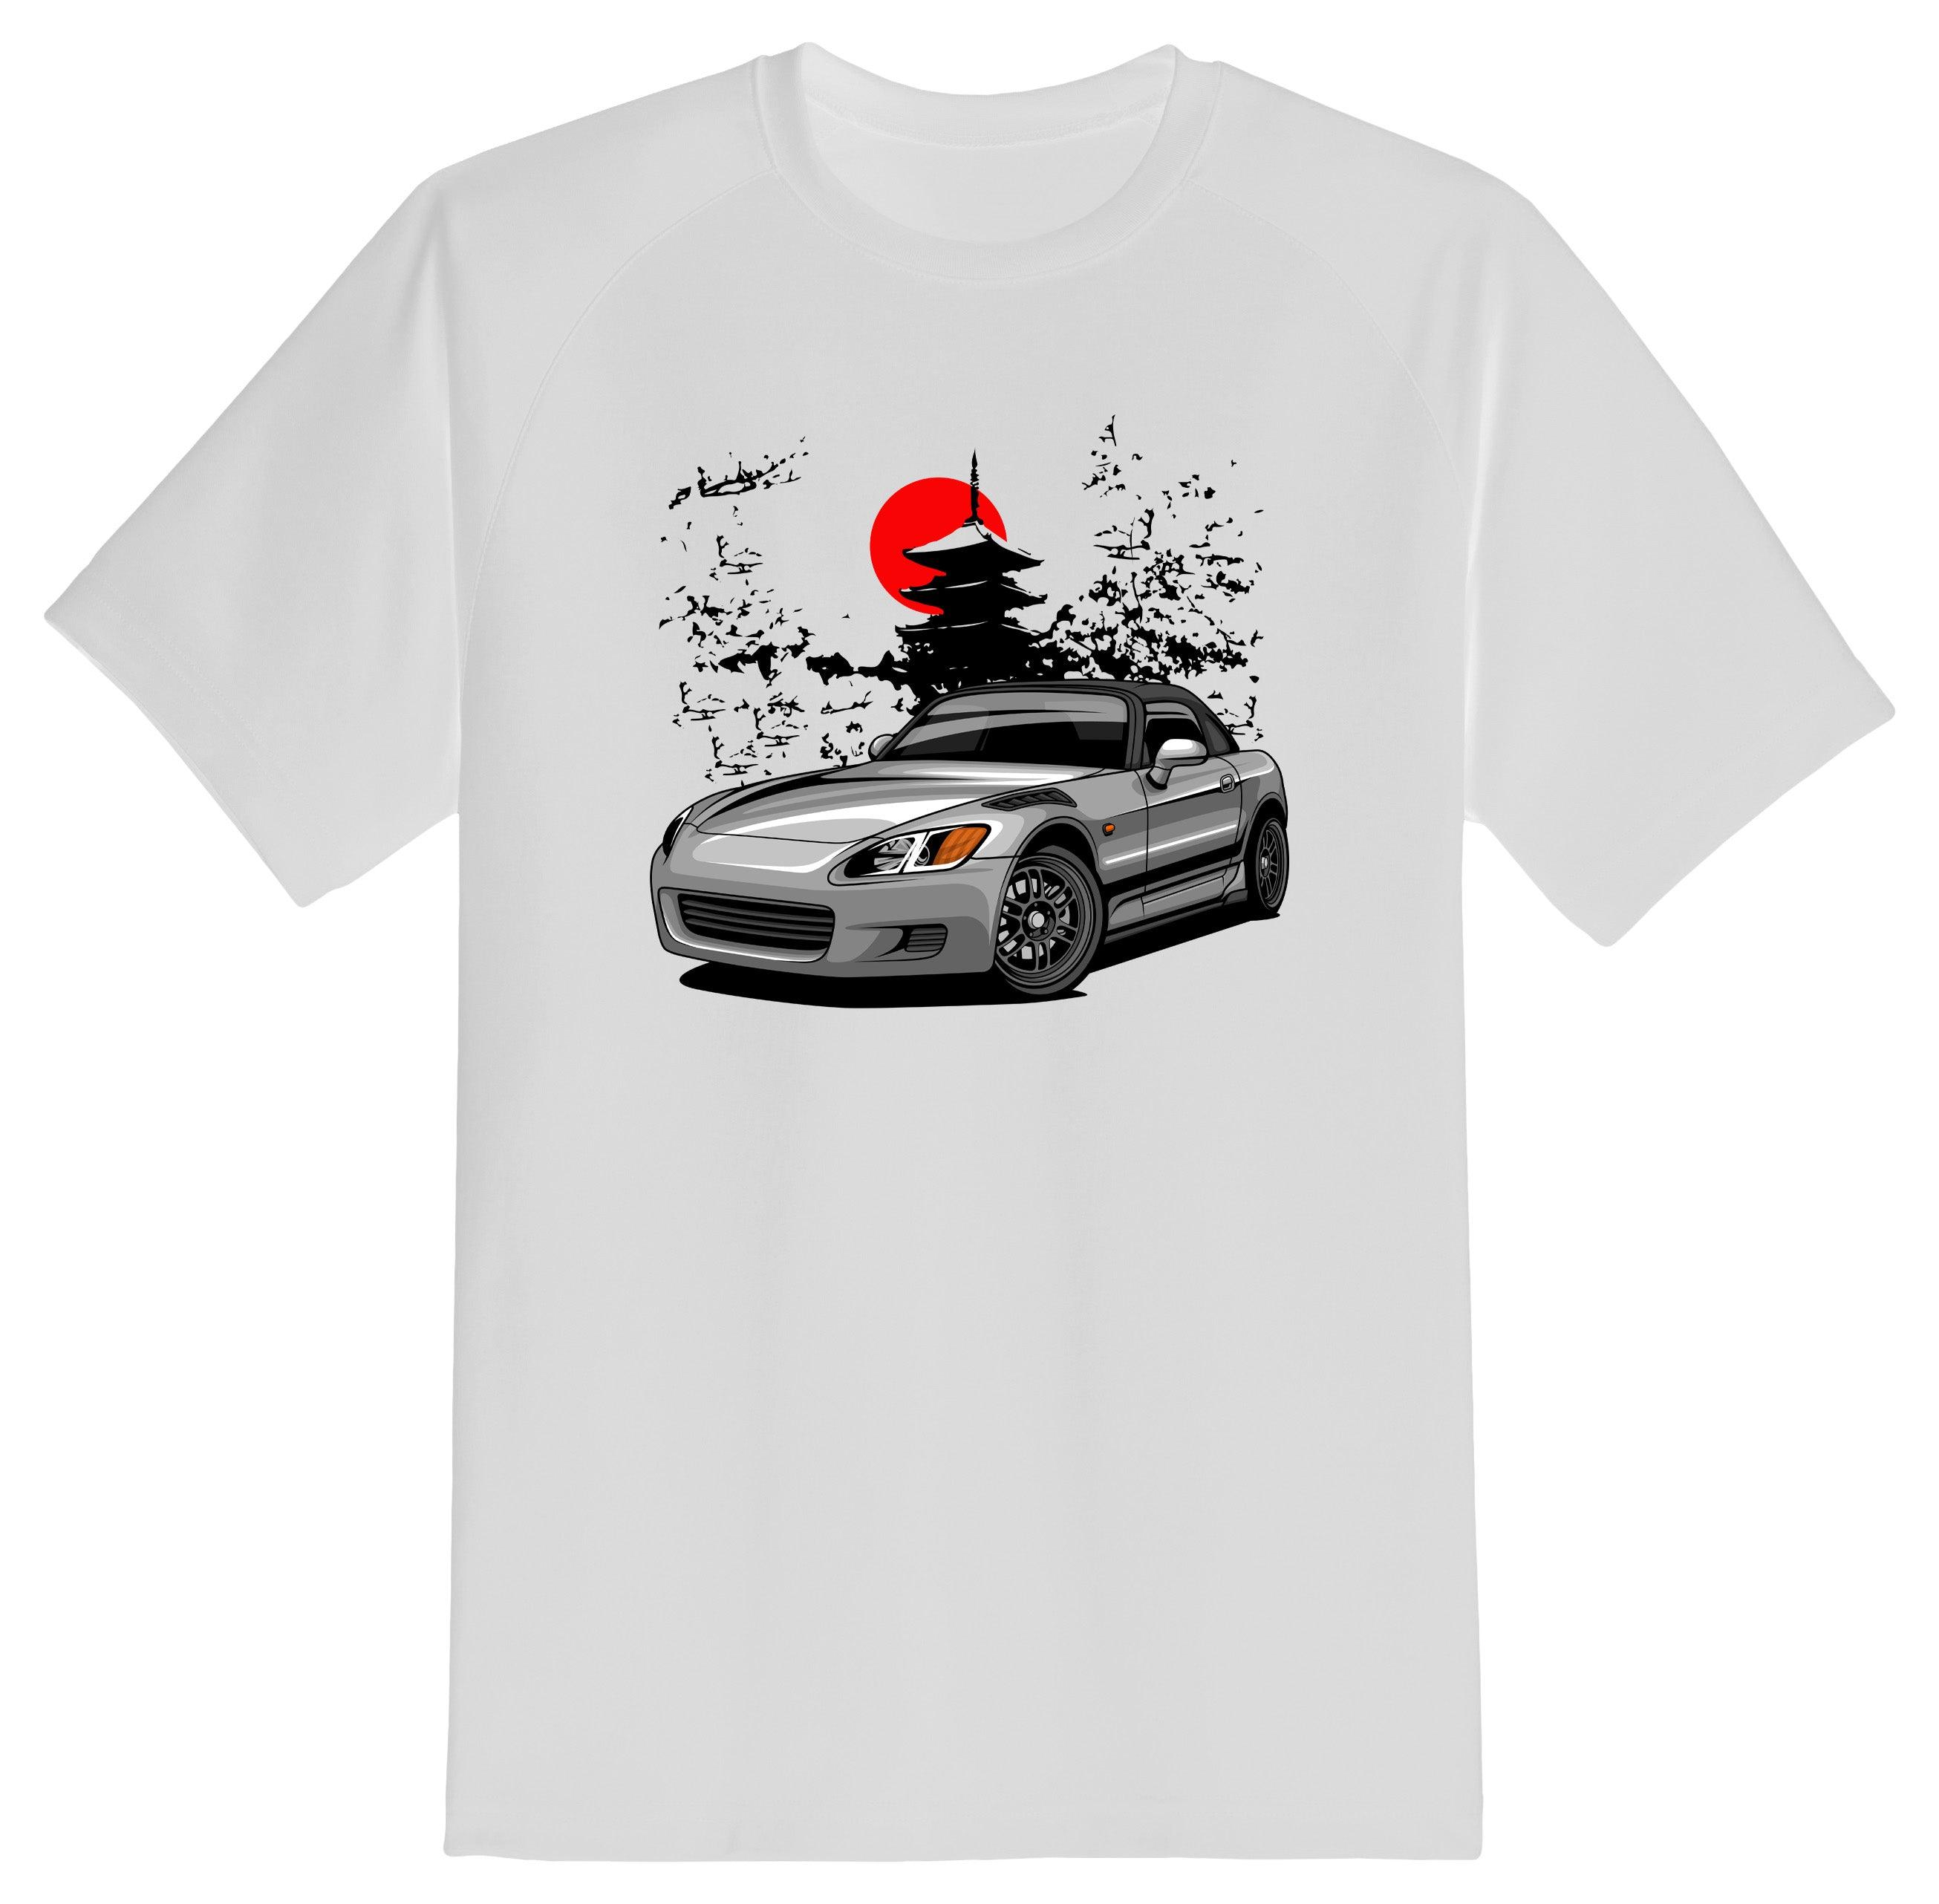 S2000 Temple T-Shirt - The Car Culture